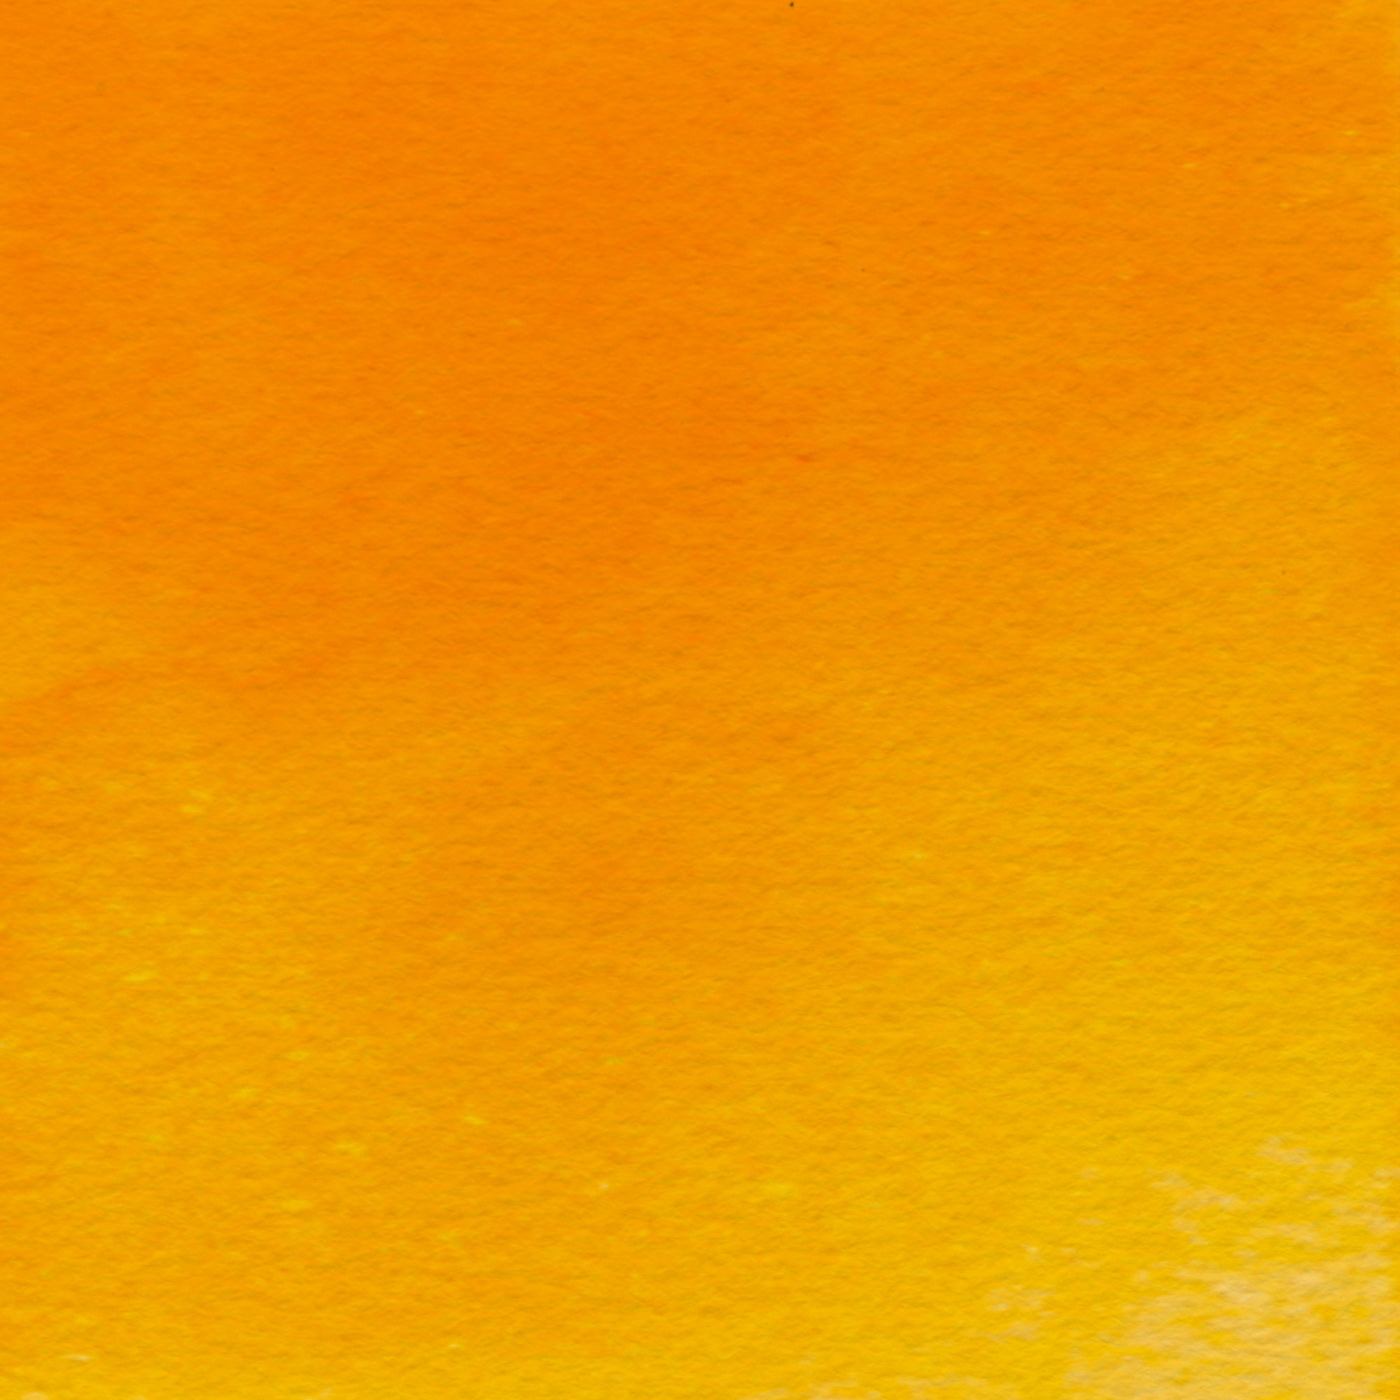 Winsor & Newton Professional Water Colours 5ml Cadmium-Free Orange 4